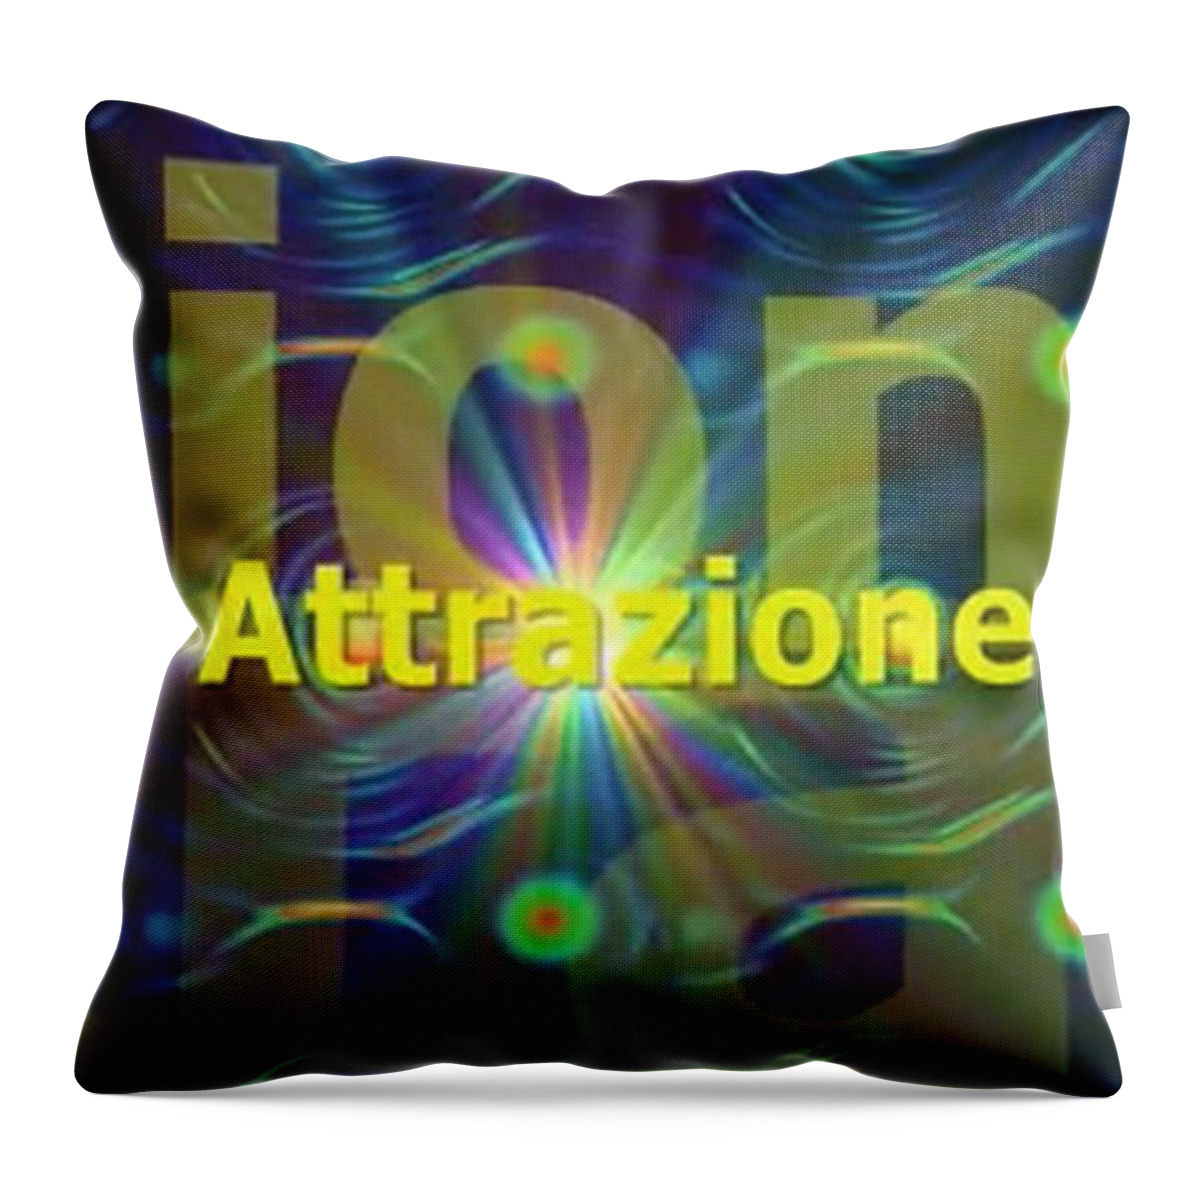 Arc Throw Pillow featuring the digital art Attrazione by Archangelus Gallery